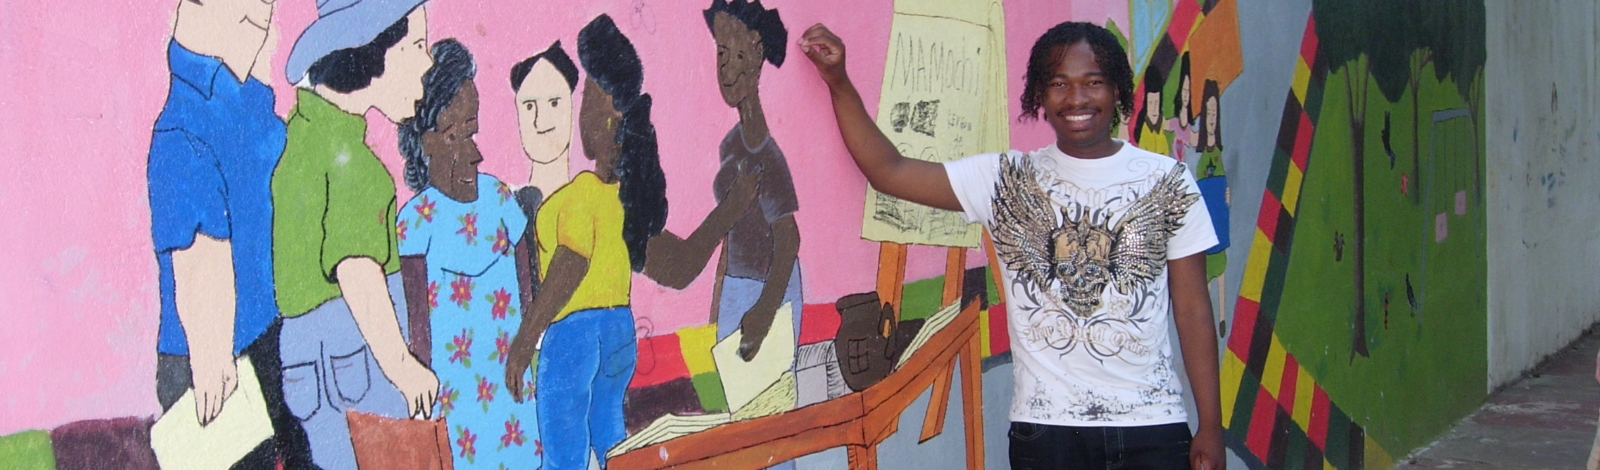 Muralisme au Nicaragua 2010